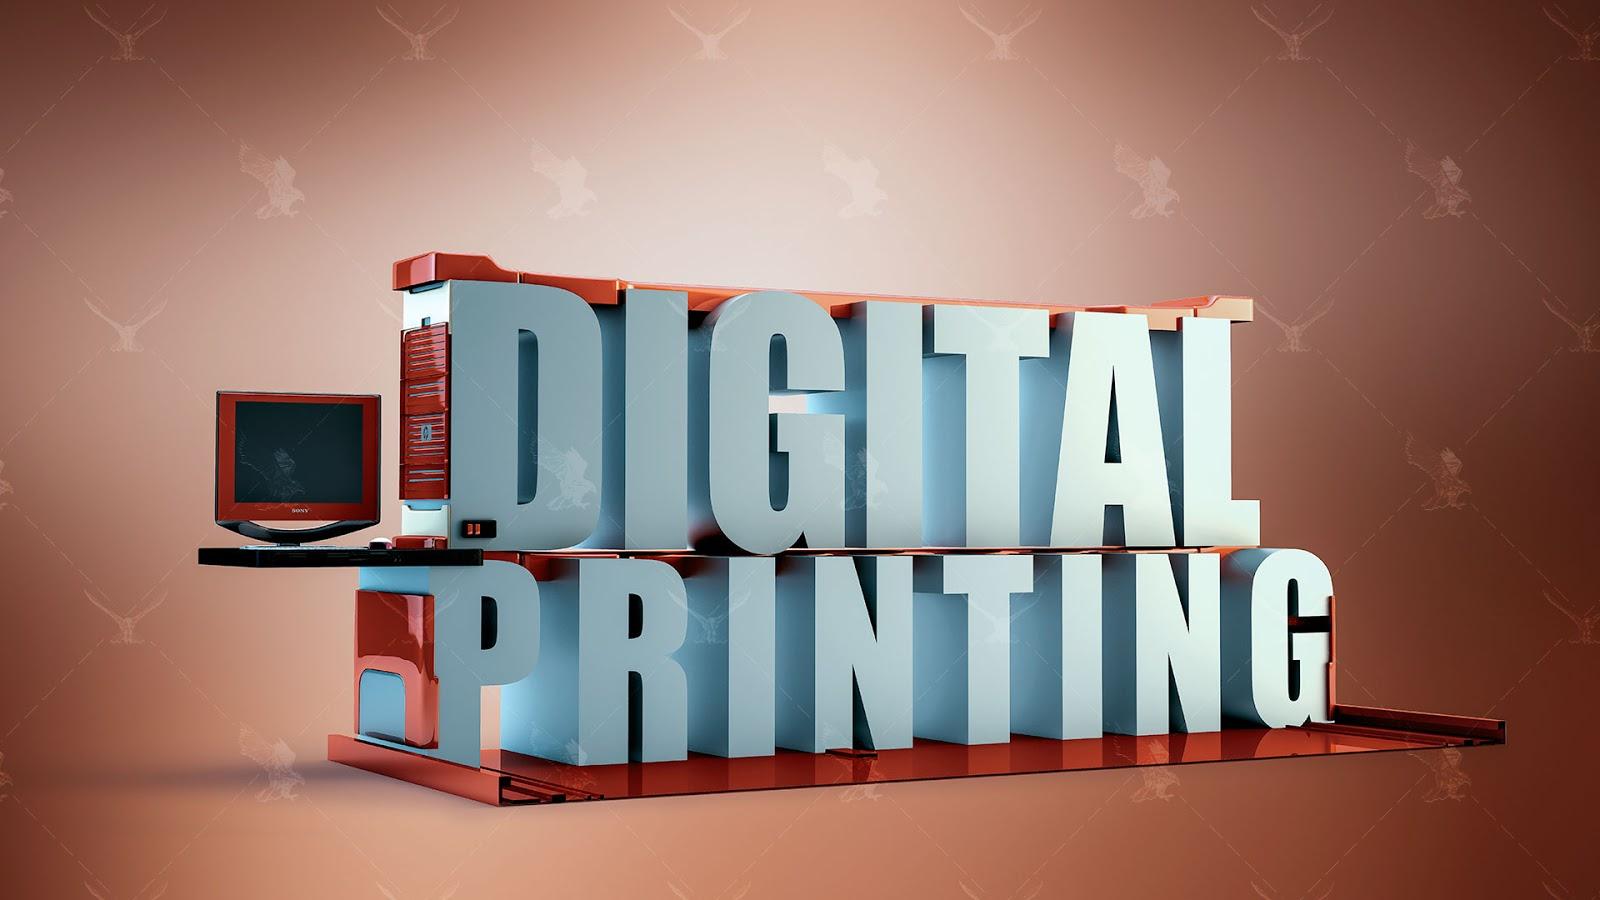 Digitally Printed Wallpaper - Digital Printing Wallpaper Hd - HD Wallpaper 